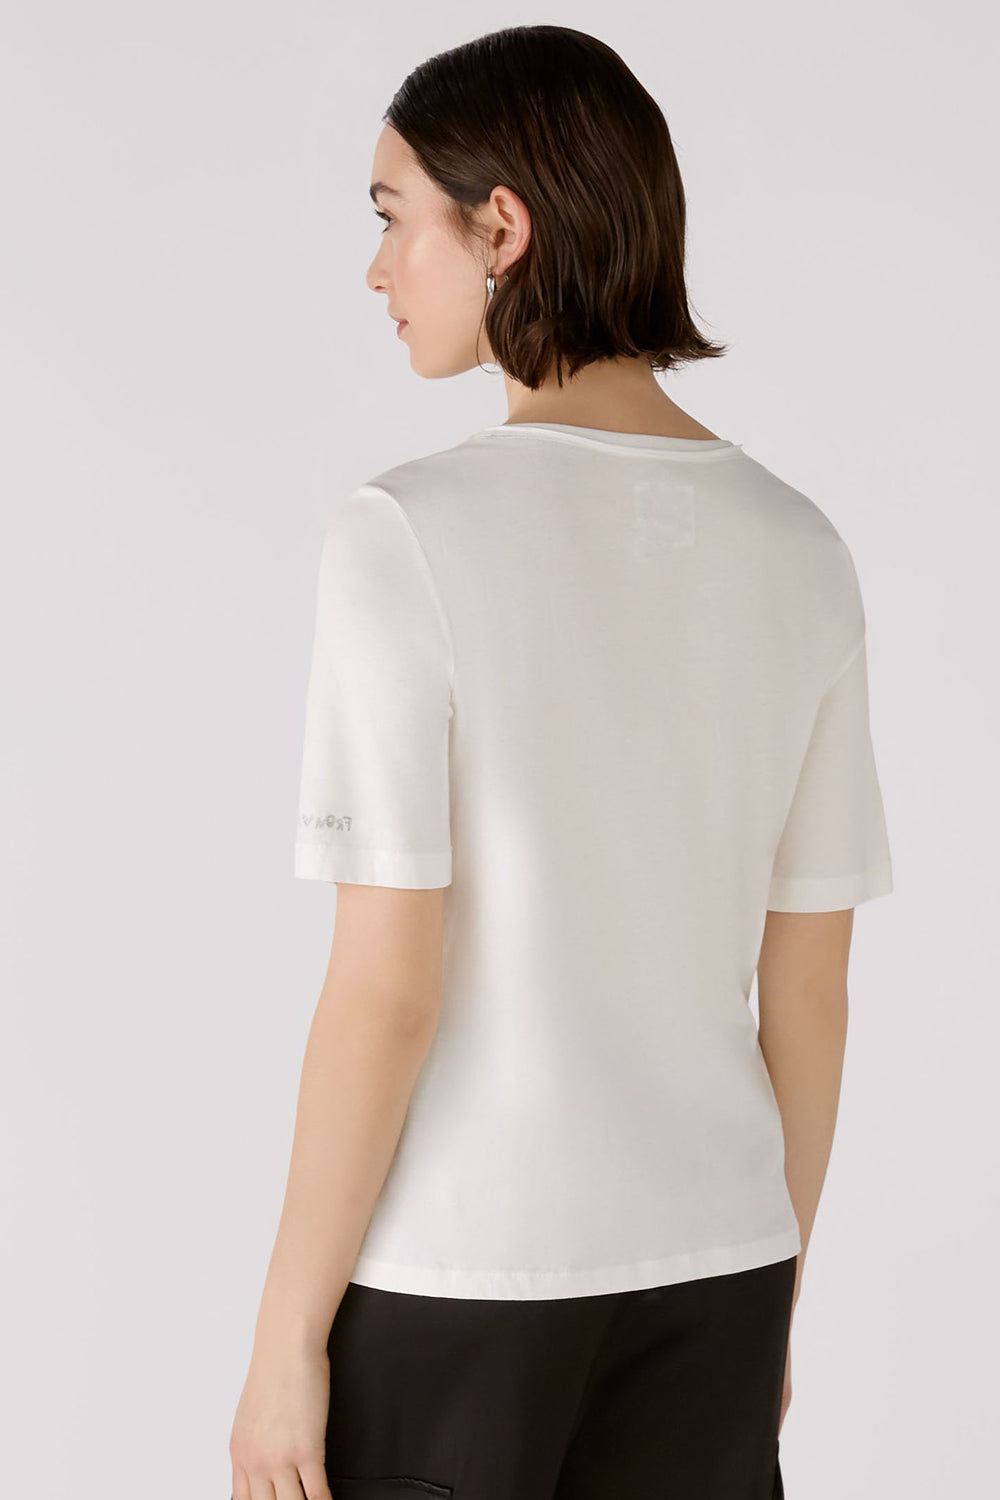 Oui 88313 Cloud Dancer White Beaded Flower T-Shirt - Olivia Grace Fashion